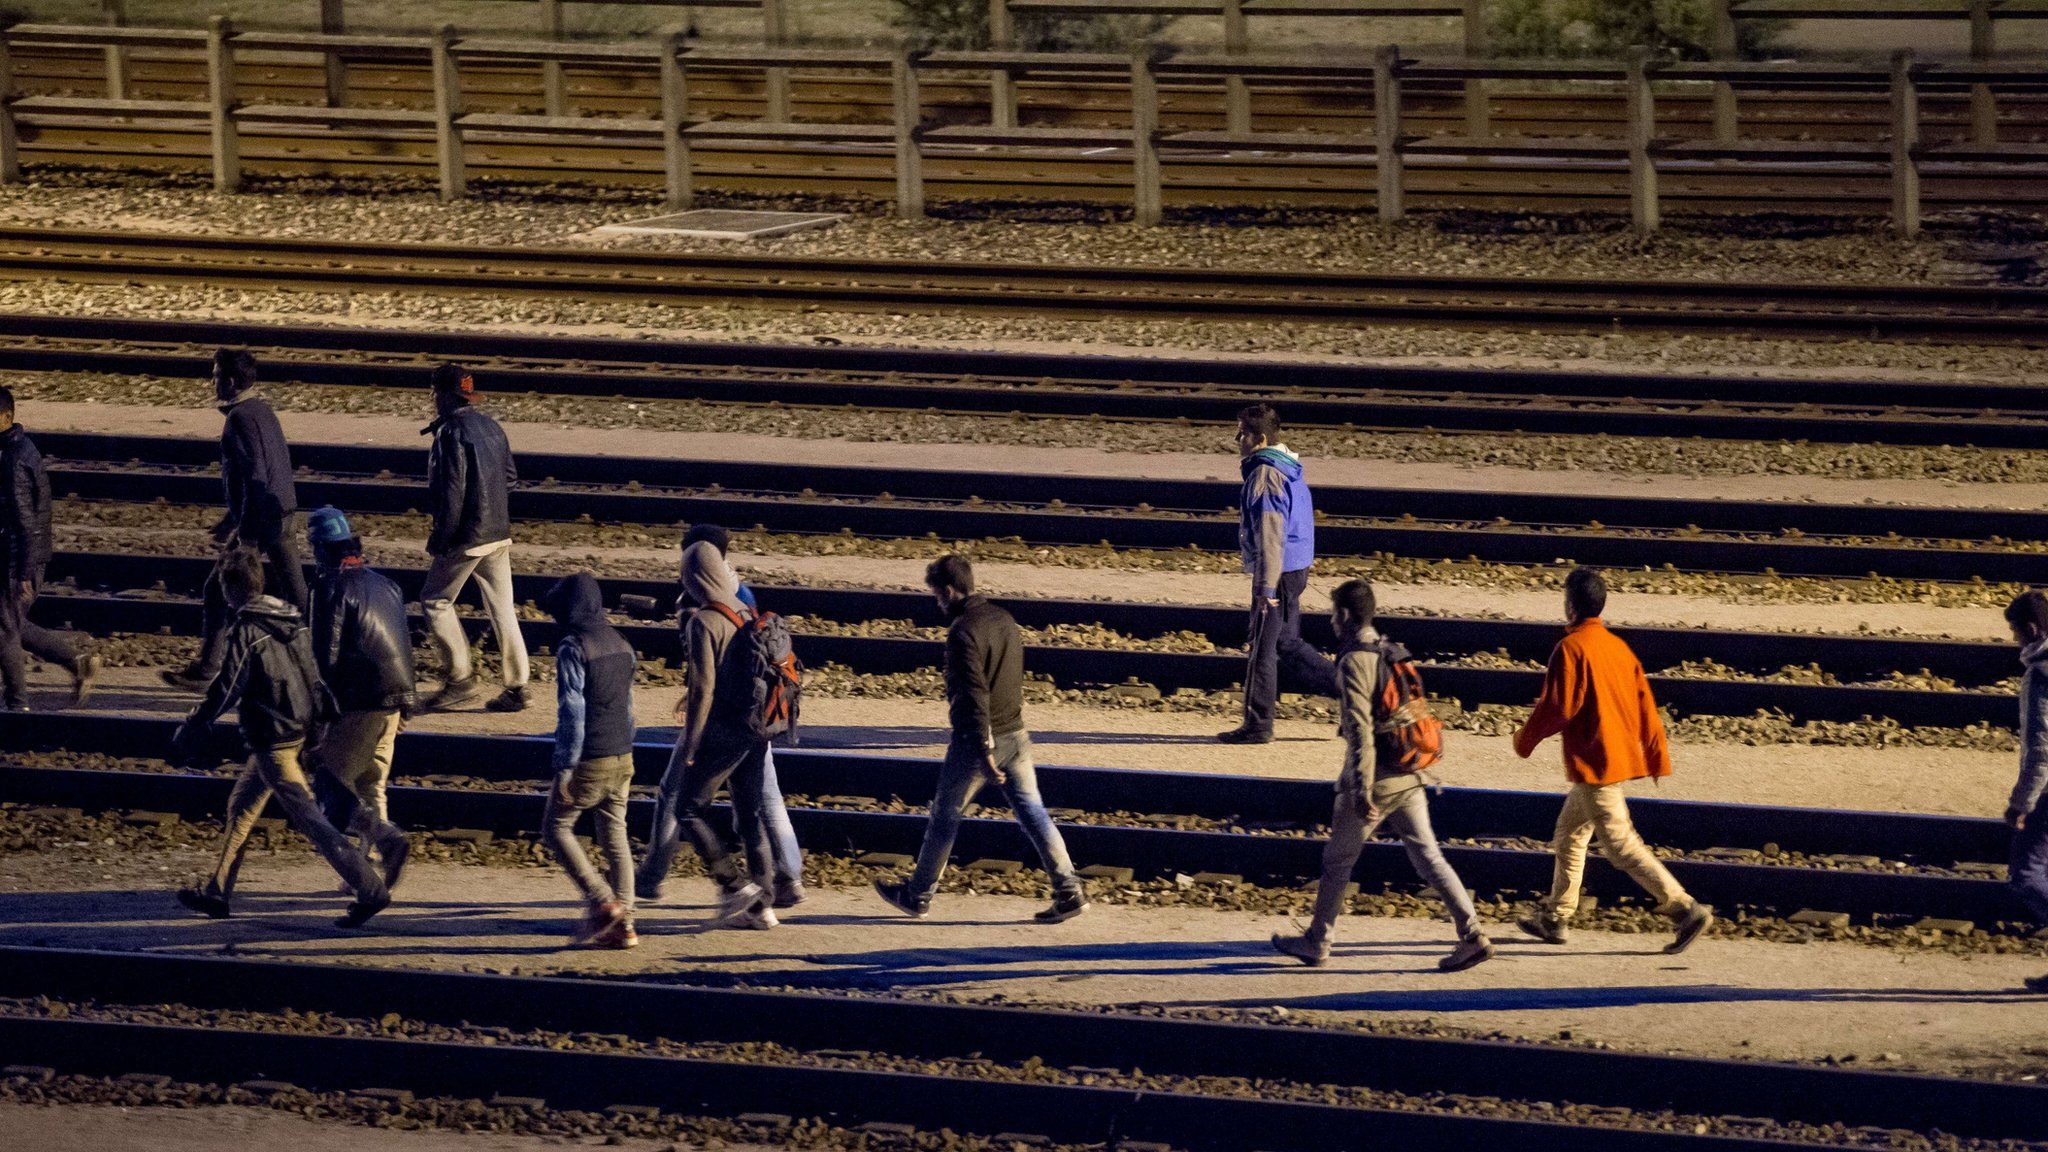 Migrants walk along rail tracks in Calais on 29 July 2015